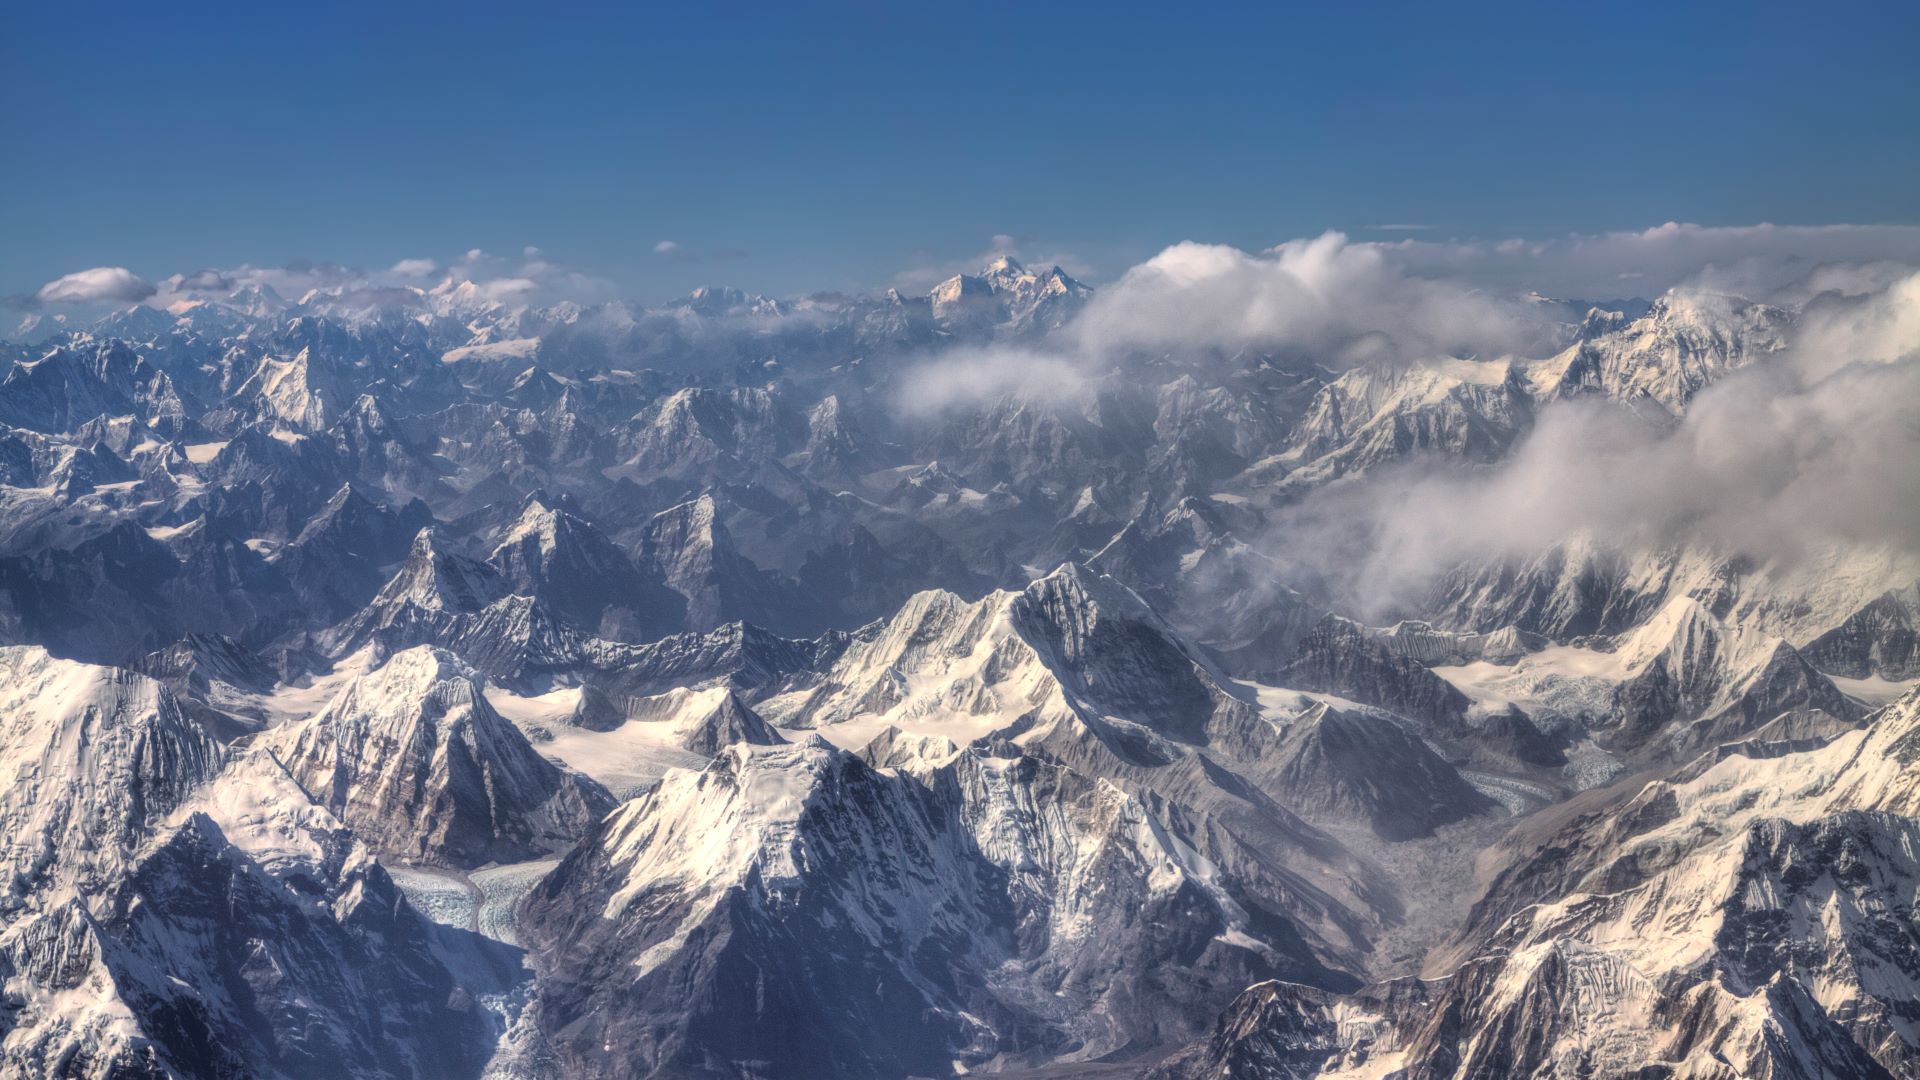 Una vista del Himalaya desde la cima del Everest